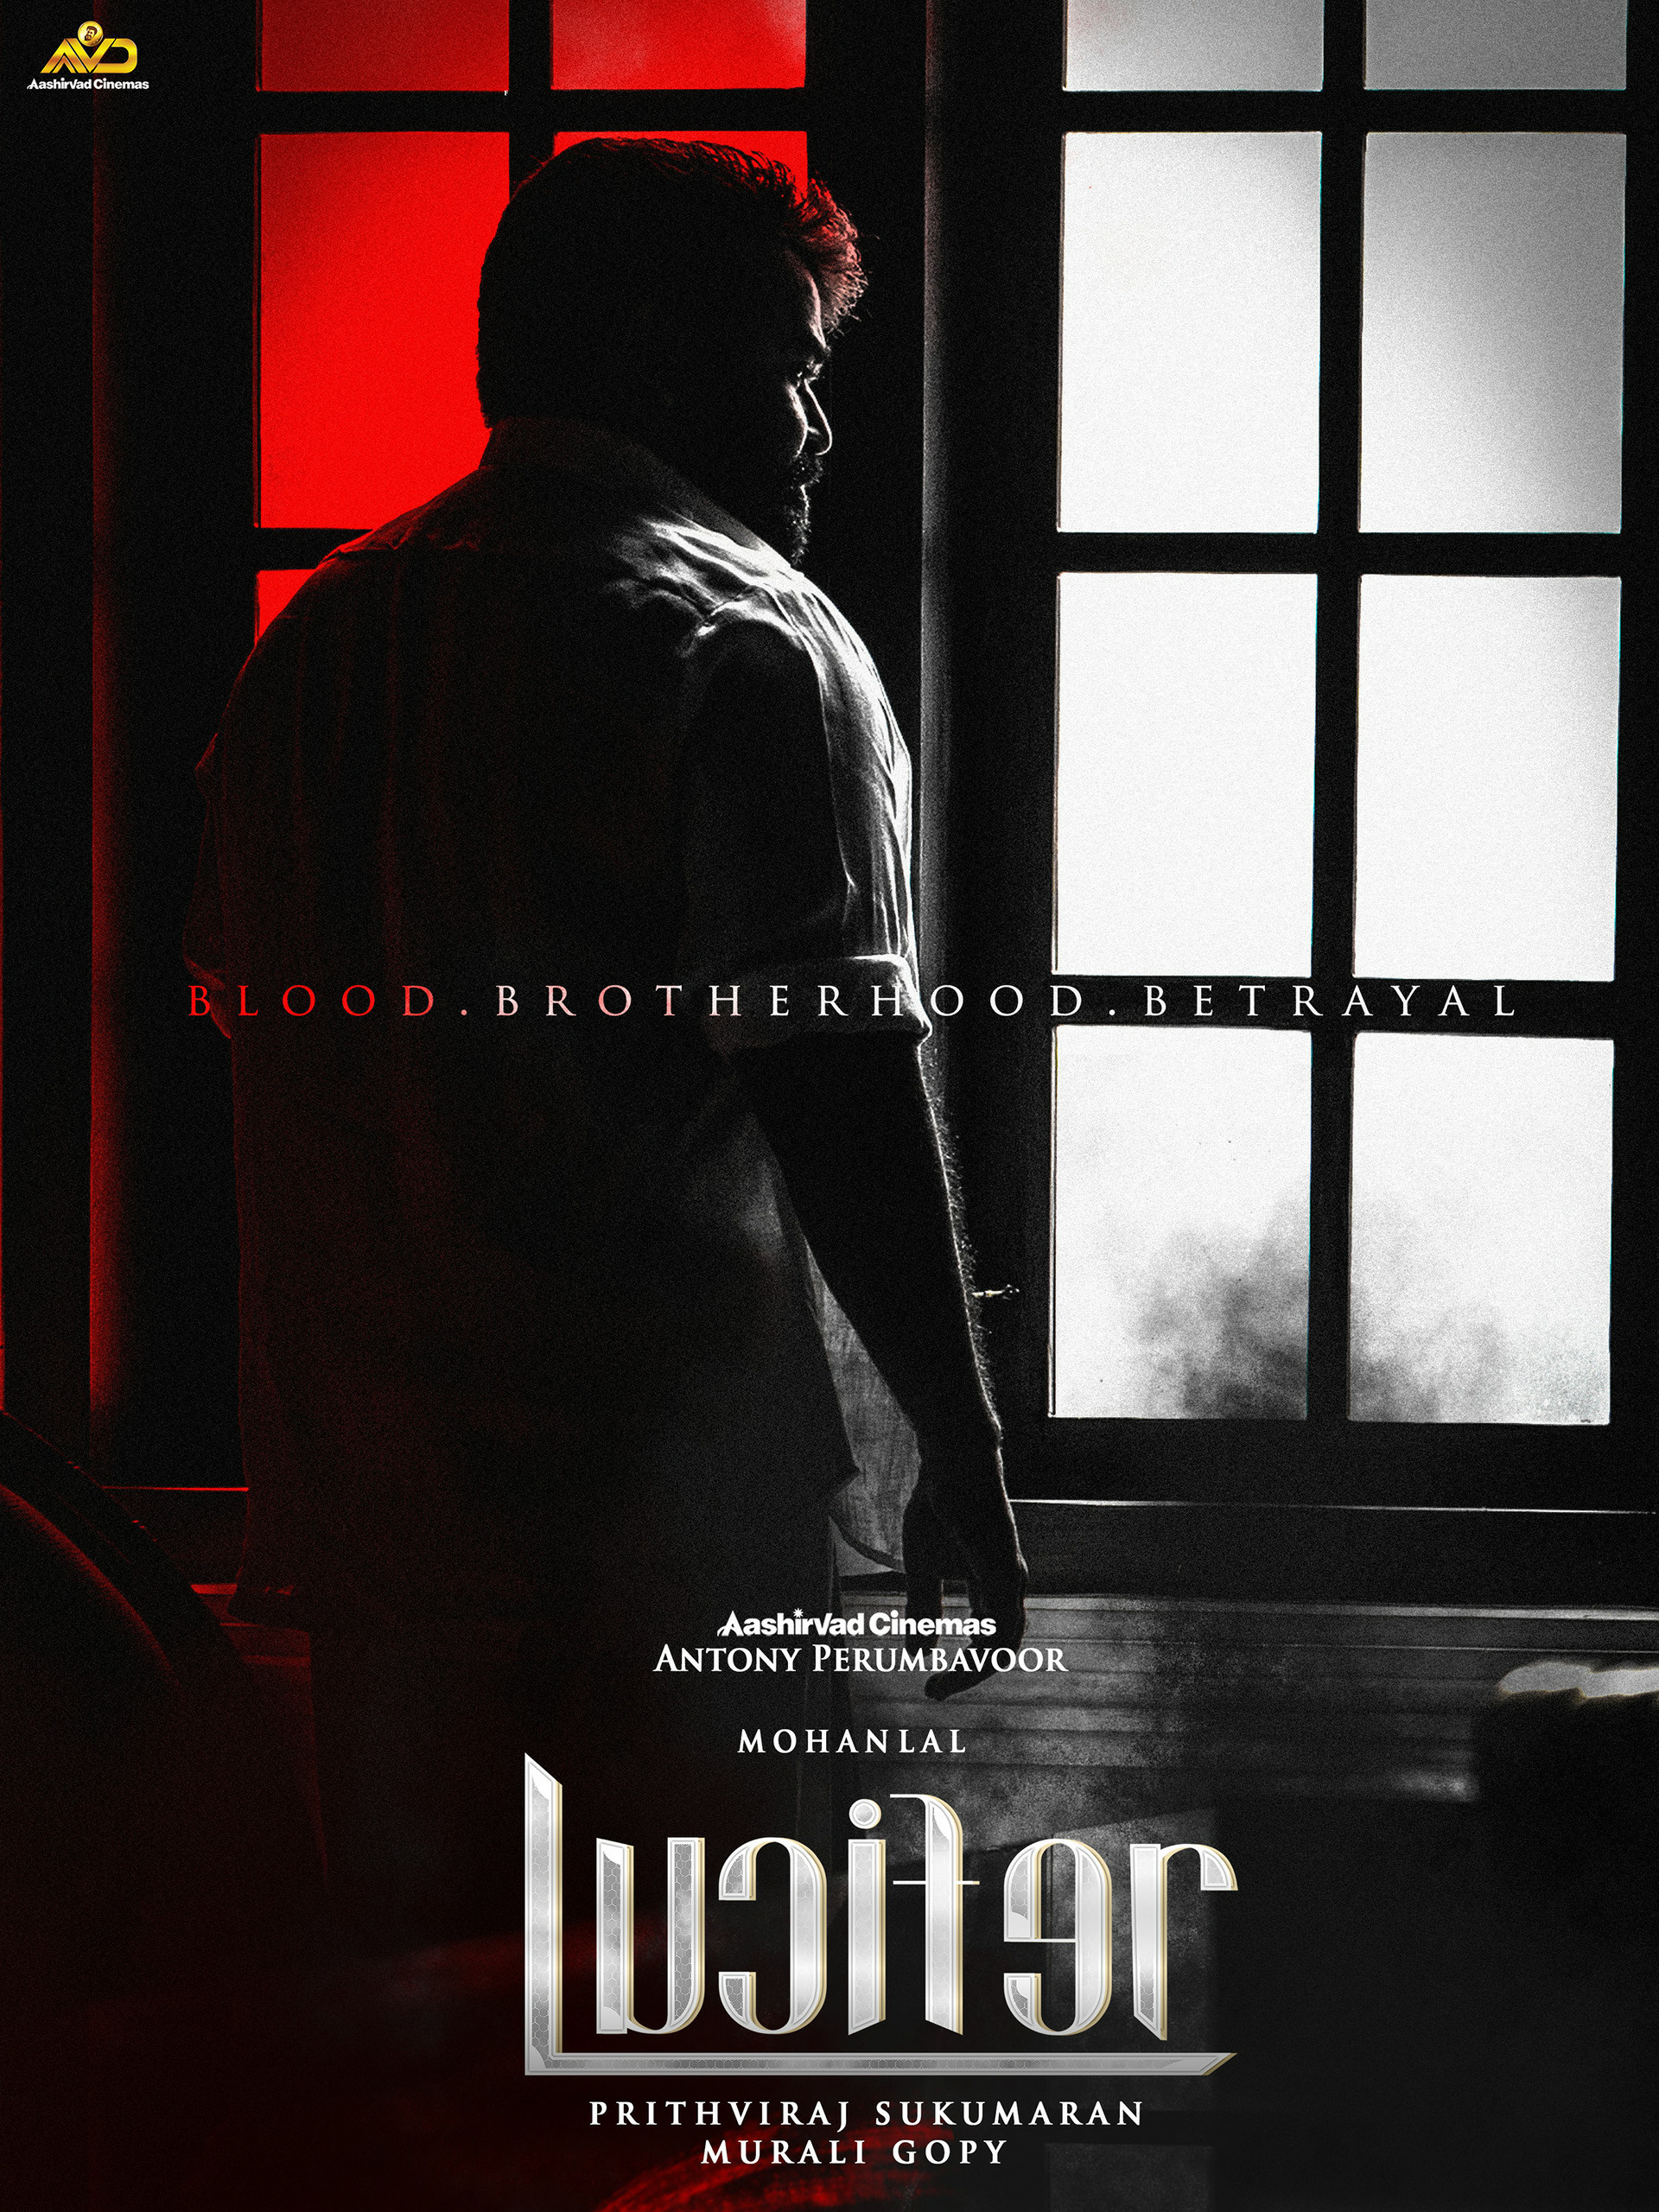 Mega Sized Movie Poster Image for Lucifer (#3 of 23)